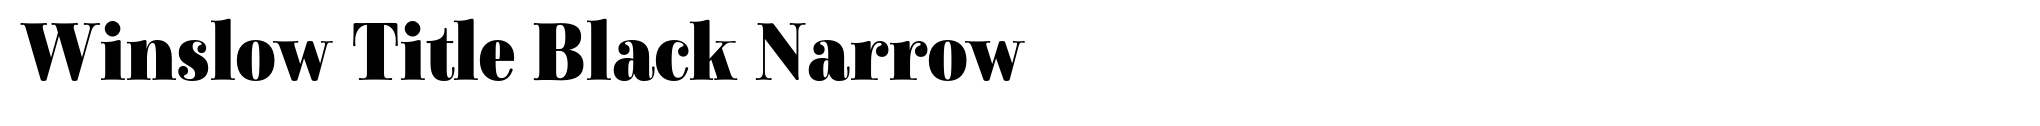 Winslow Title Black Narrow image